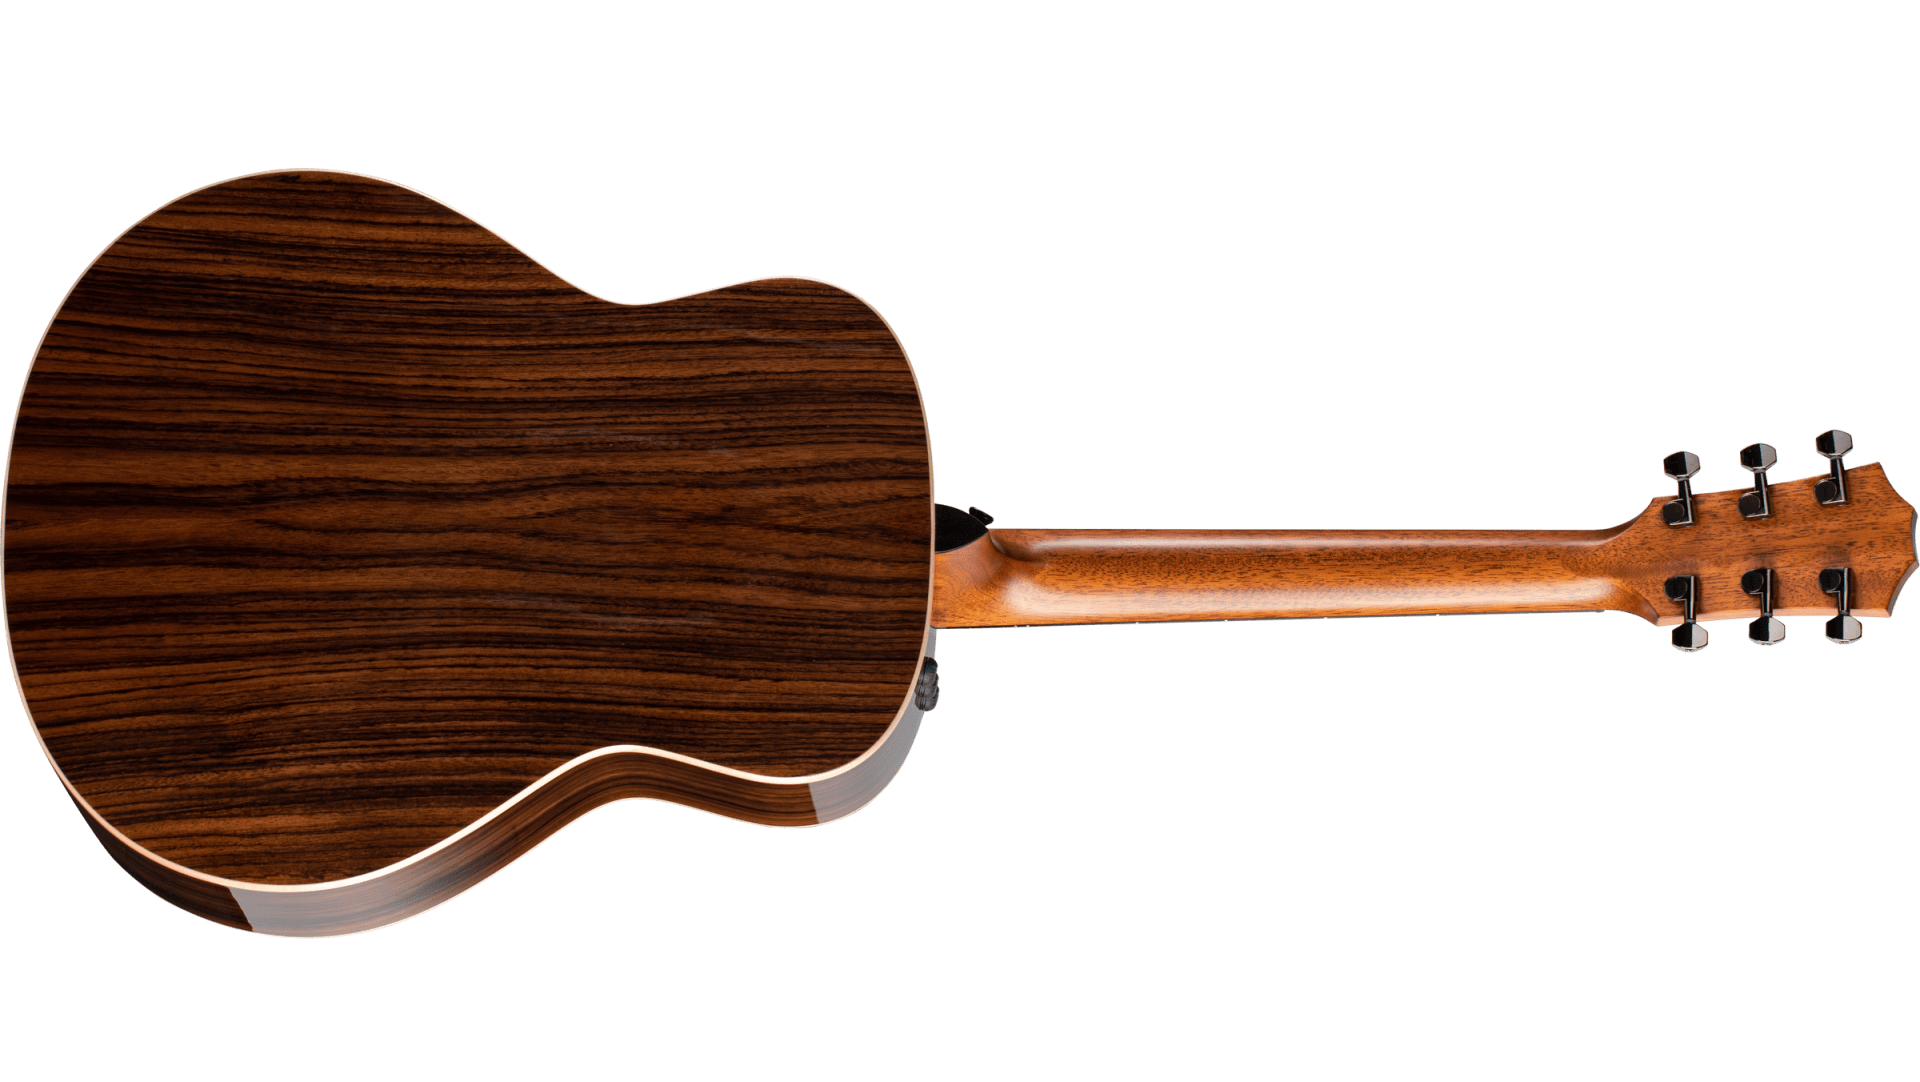 Taylor GT 811e Acoustic-electric Guitar - Natural